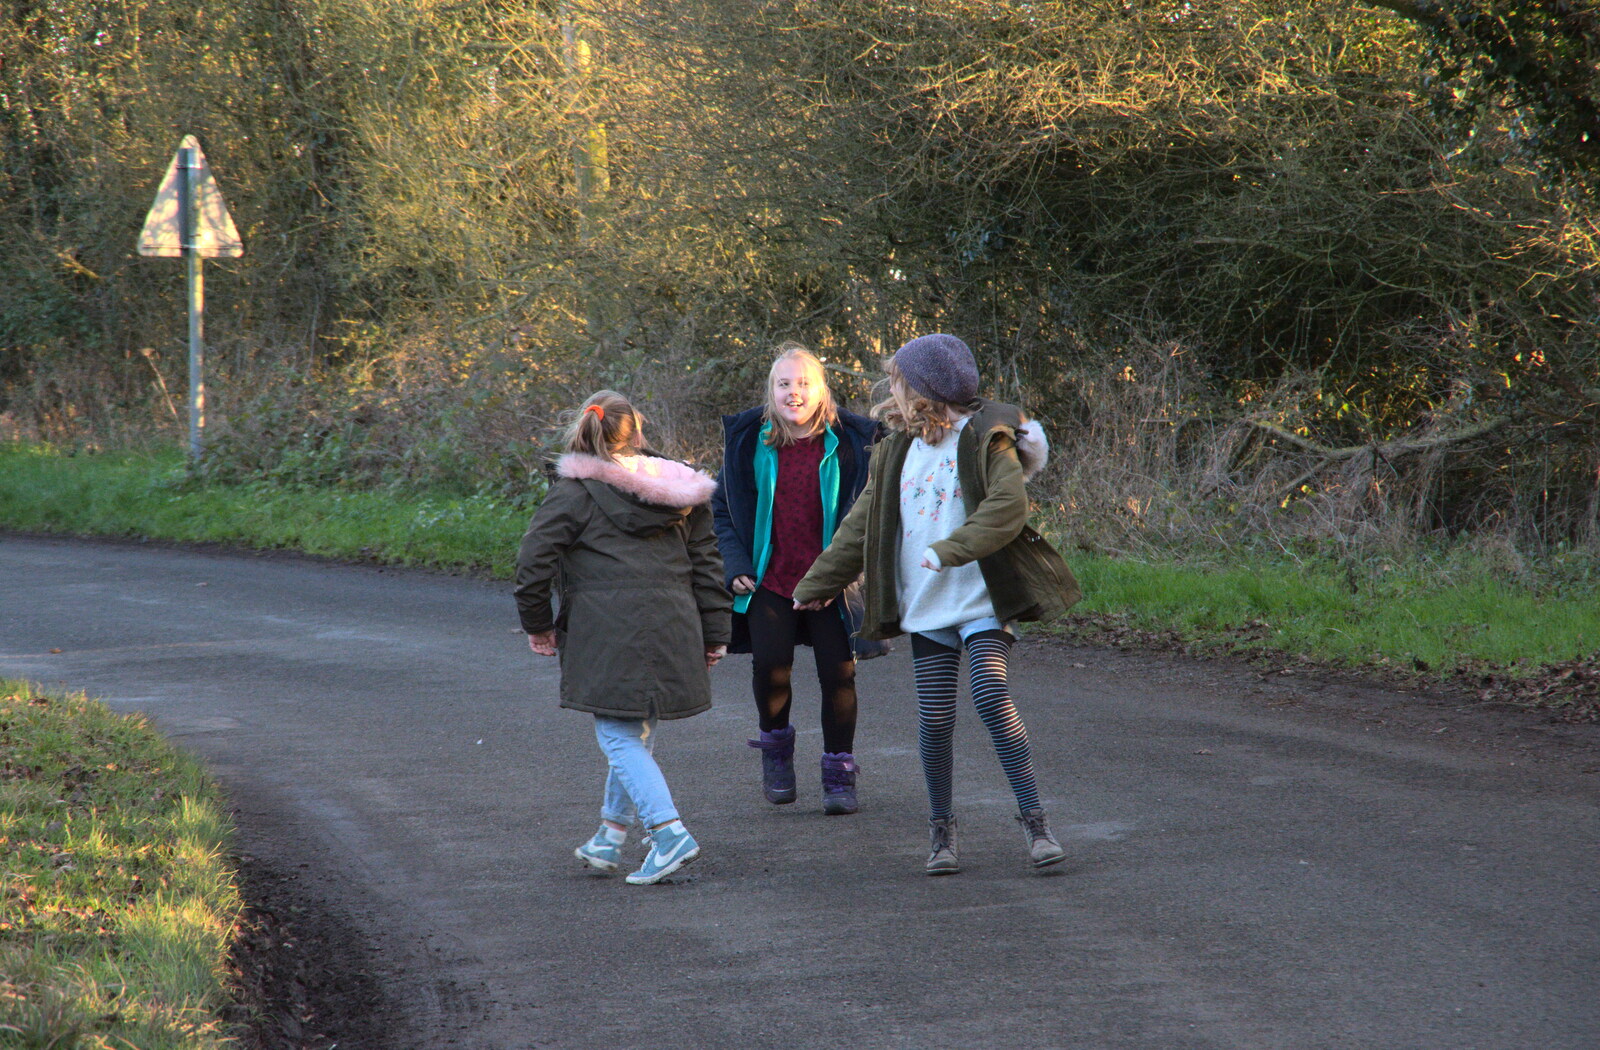 The girls walk backwards for some reason from Snowdrops at Talconeston Hall, Tacolneston, Norfolk - 7th February 2020